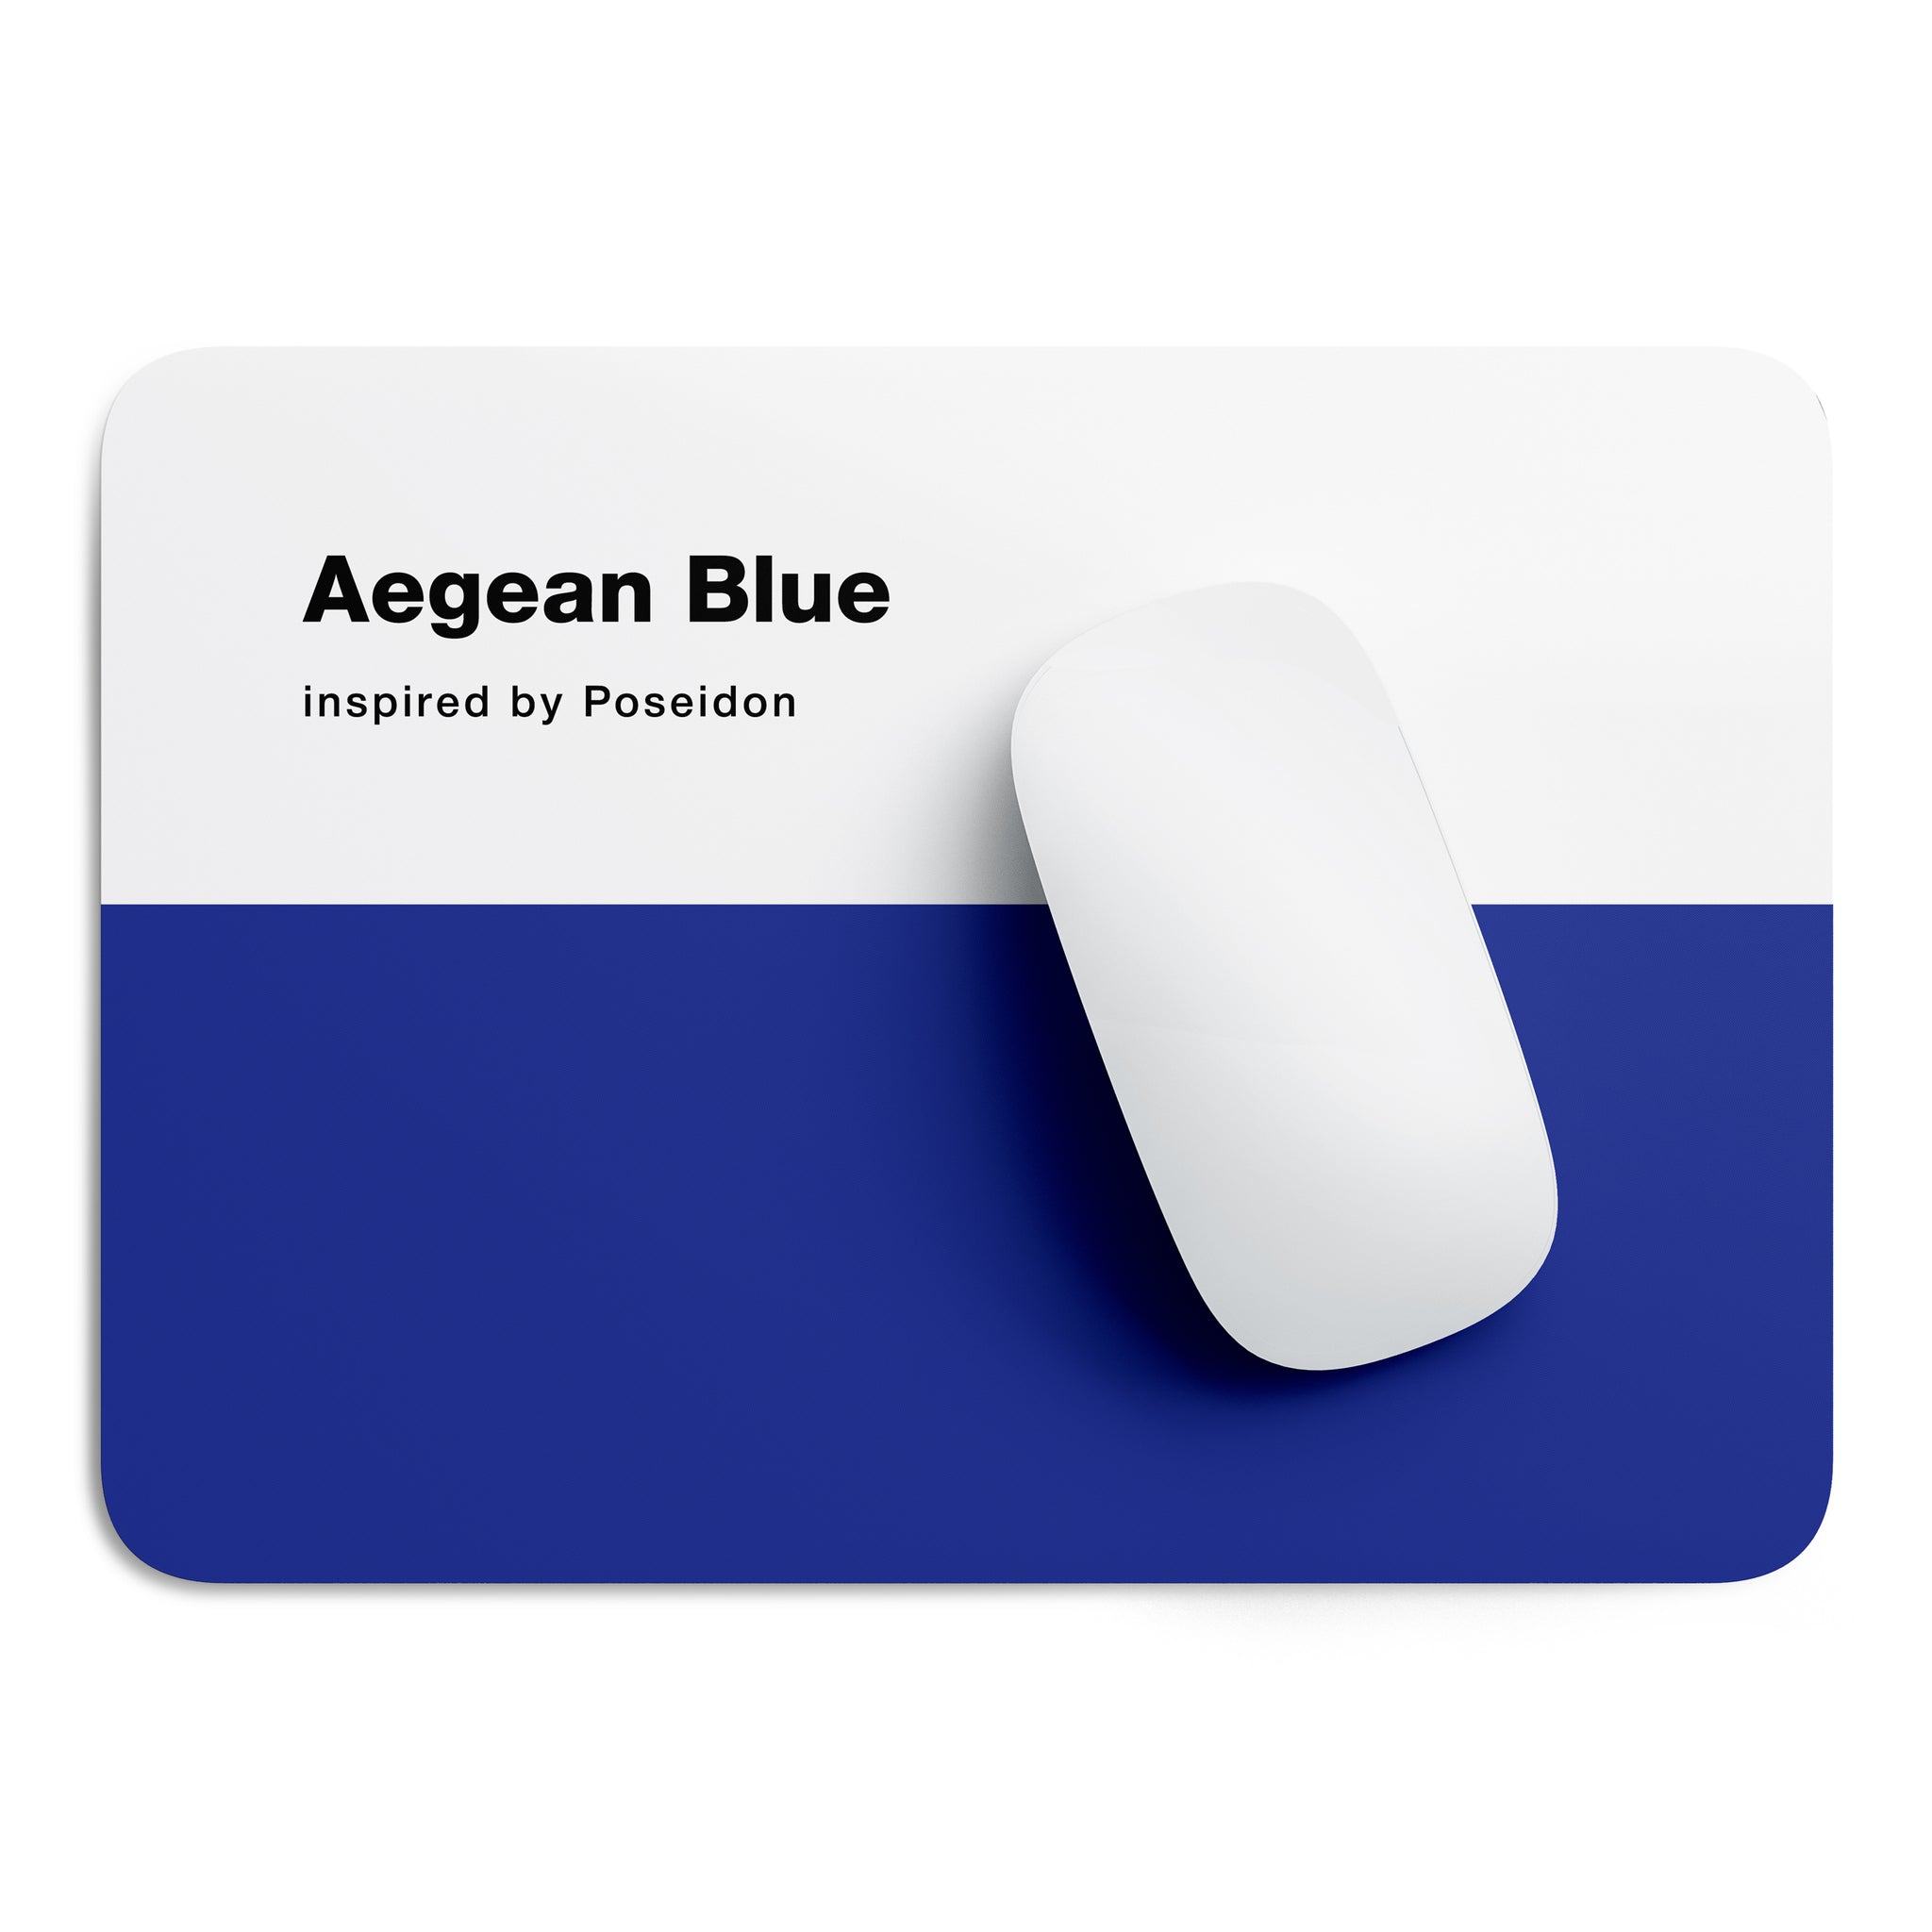 Aegean Blue mouse pad